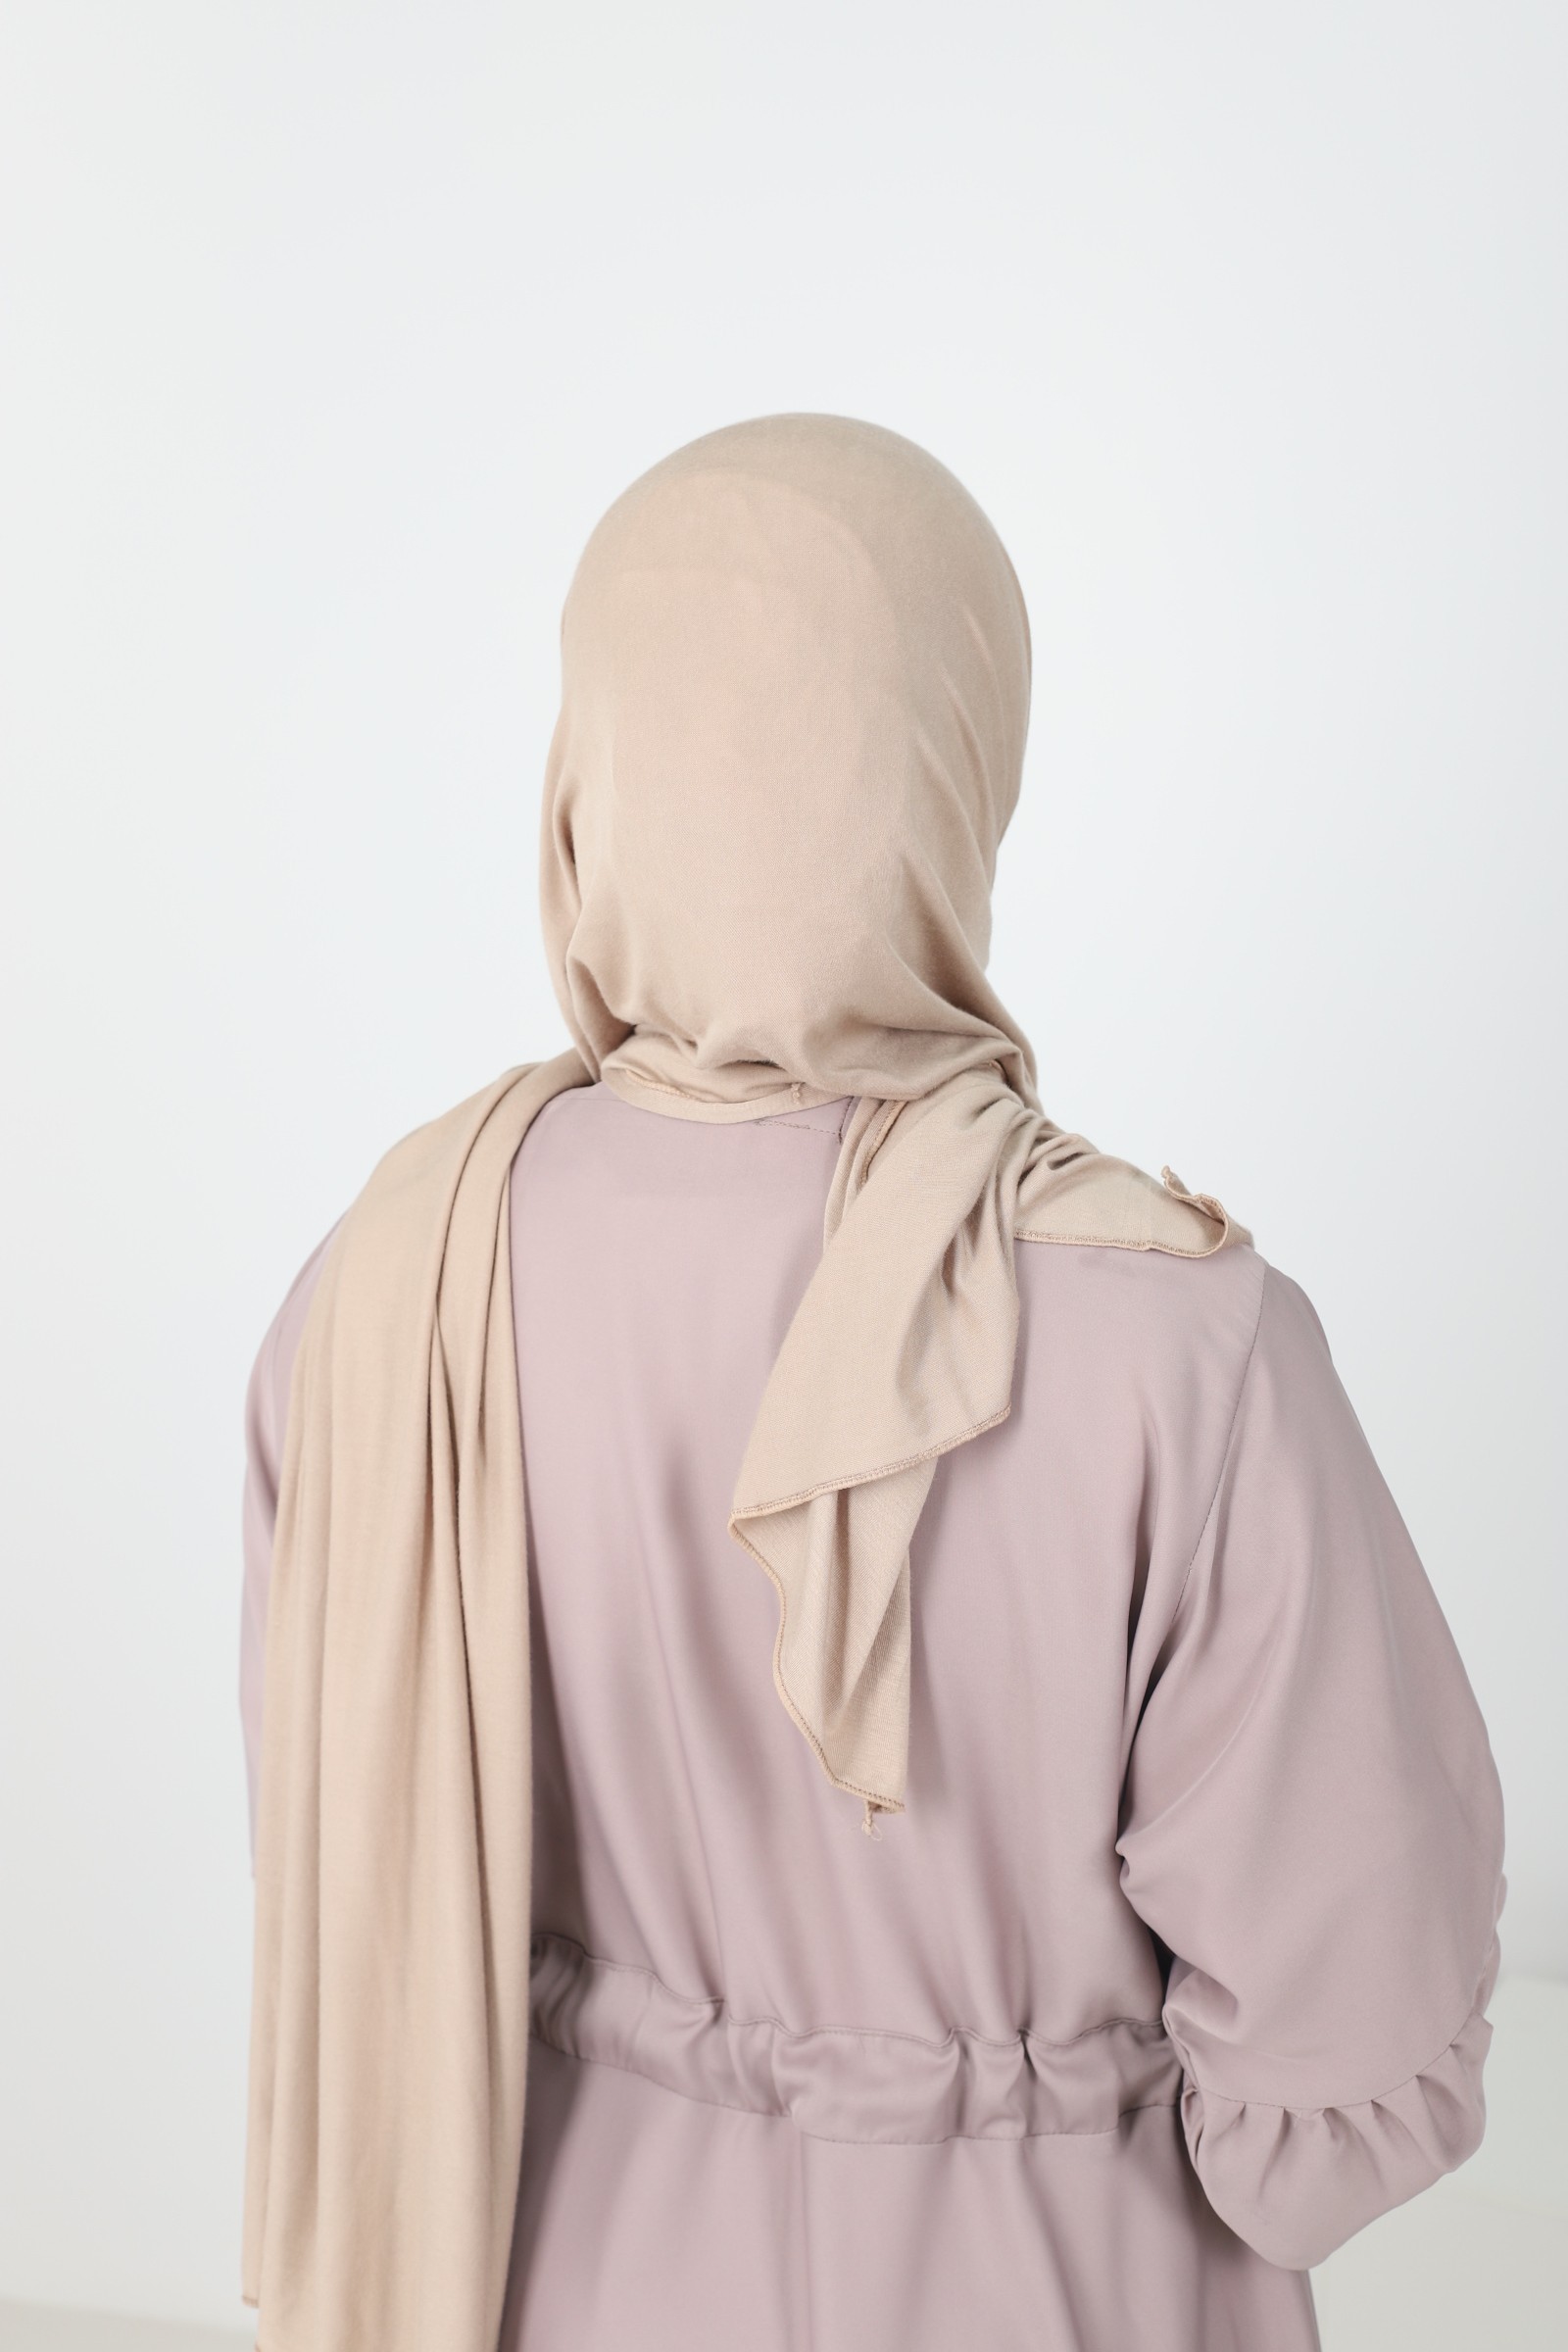 hijab jersey classic pas chère pour femme musulmane - hijab jennah 